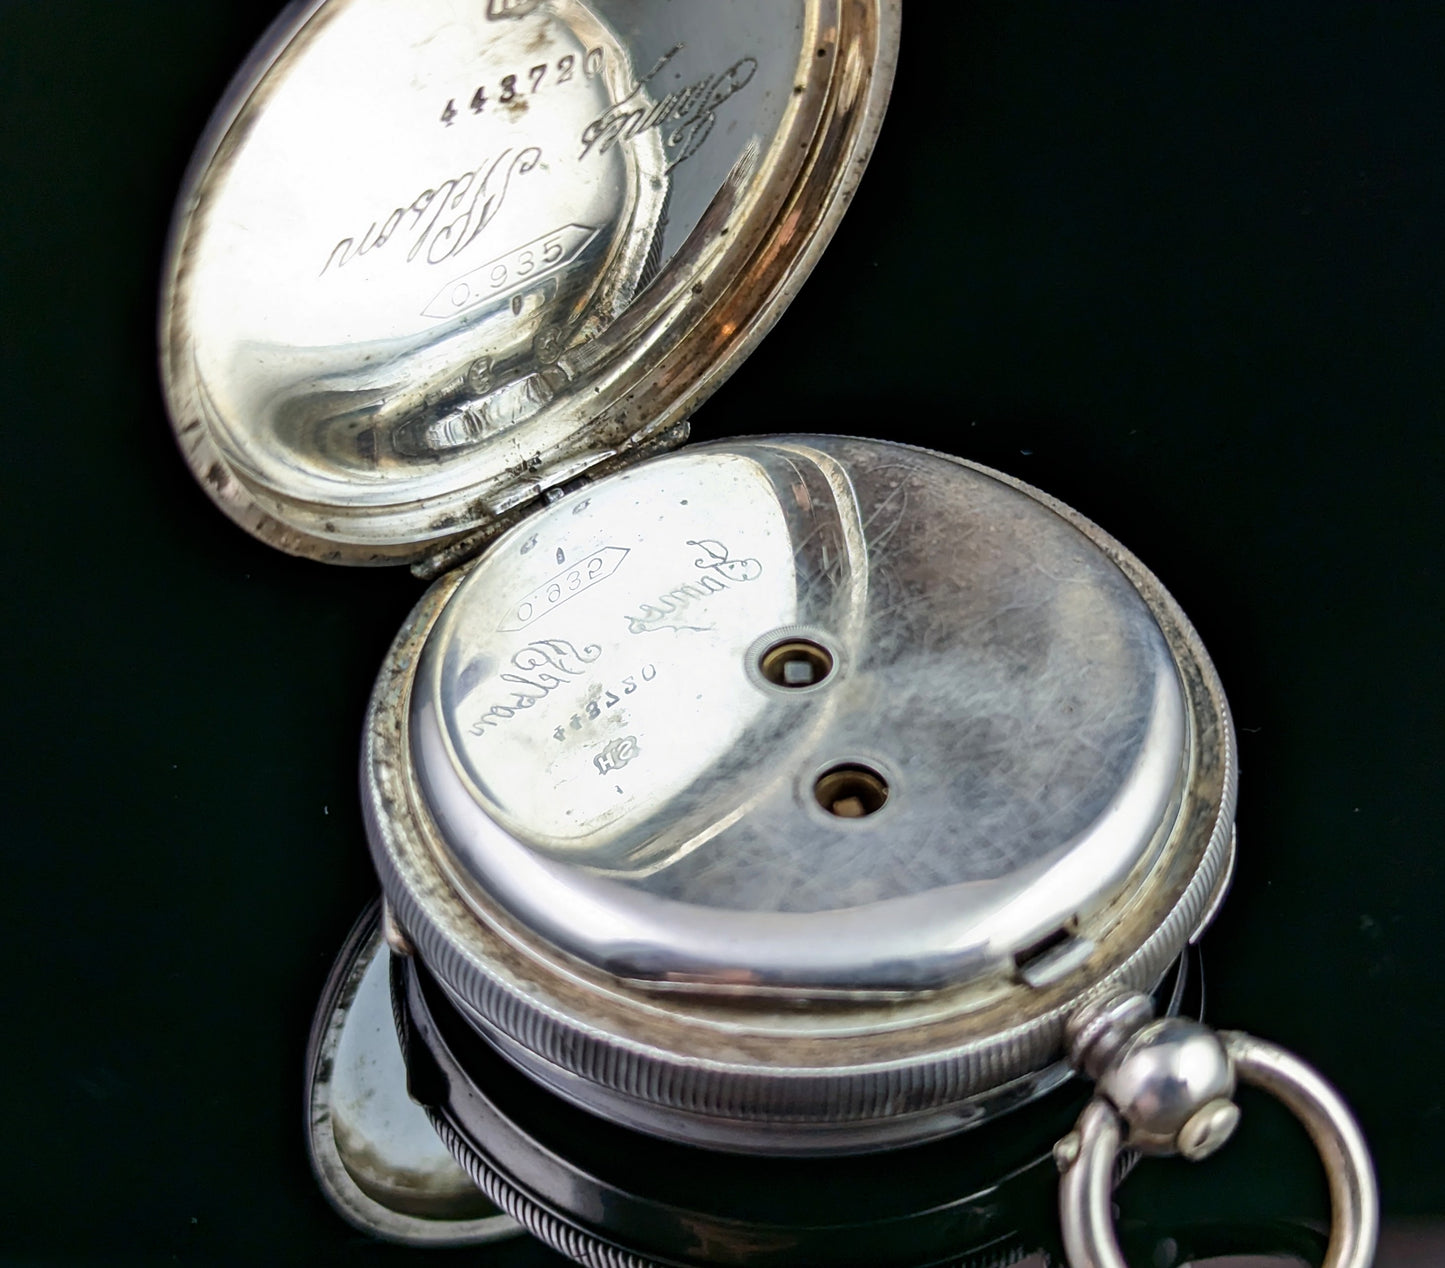 Antique silver pocket watch, Fob watch, Swiss